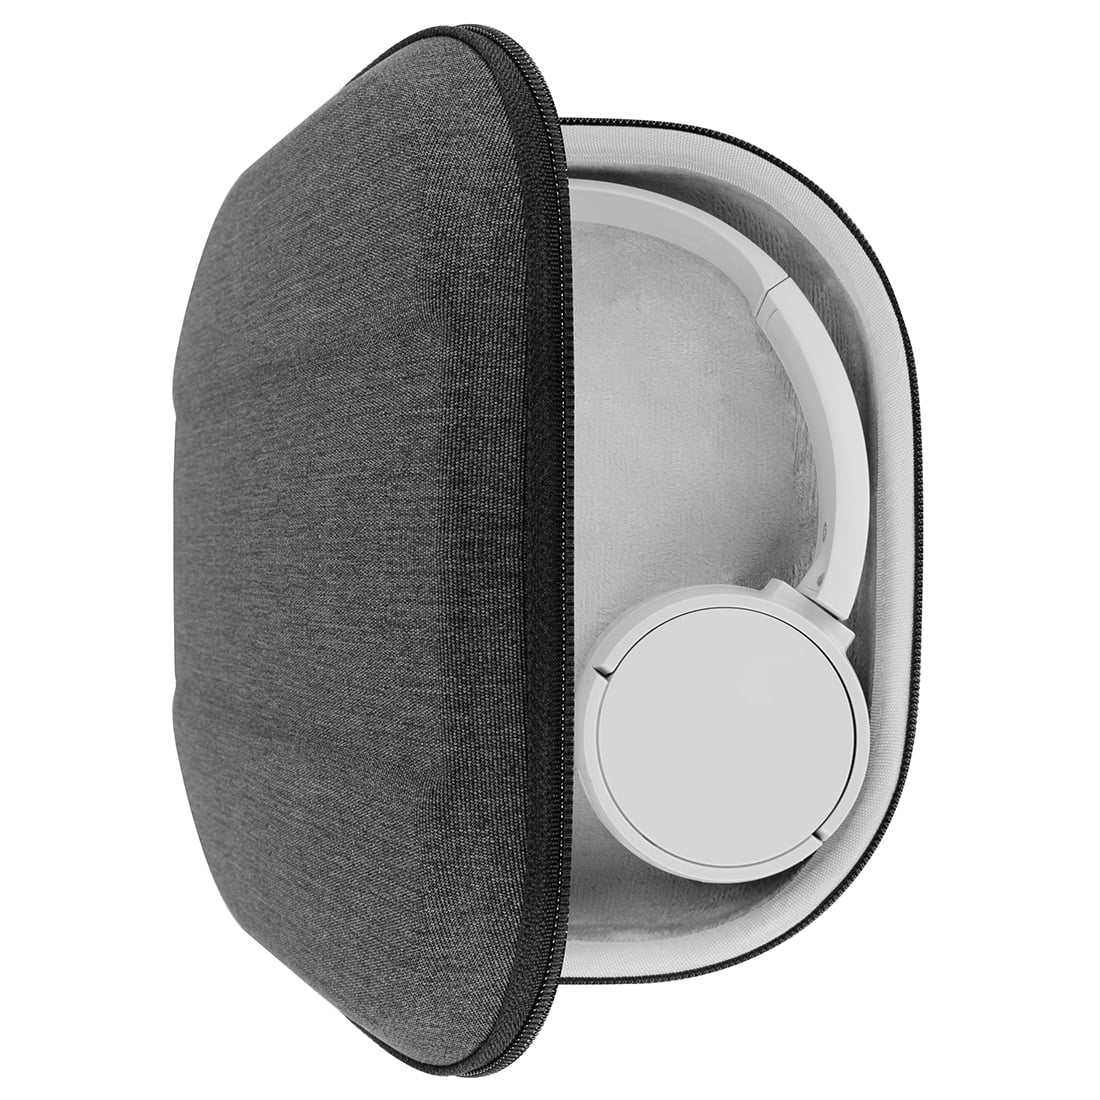 2 Pack Earphone Earbuds Headset Headphone Carrying Case Holder Mini Storage  Organizer Box Container …See more 2 Pack Earphone Earbuds Headset